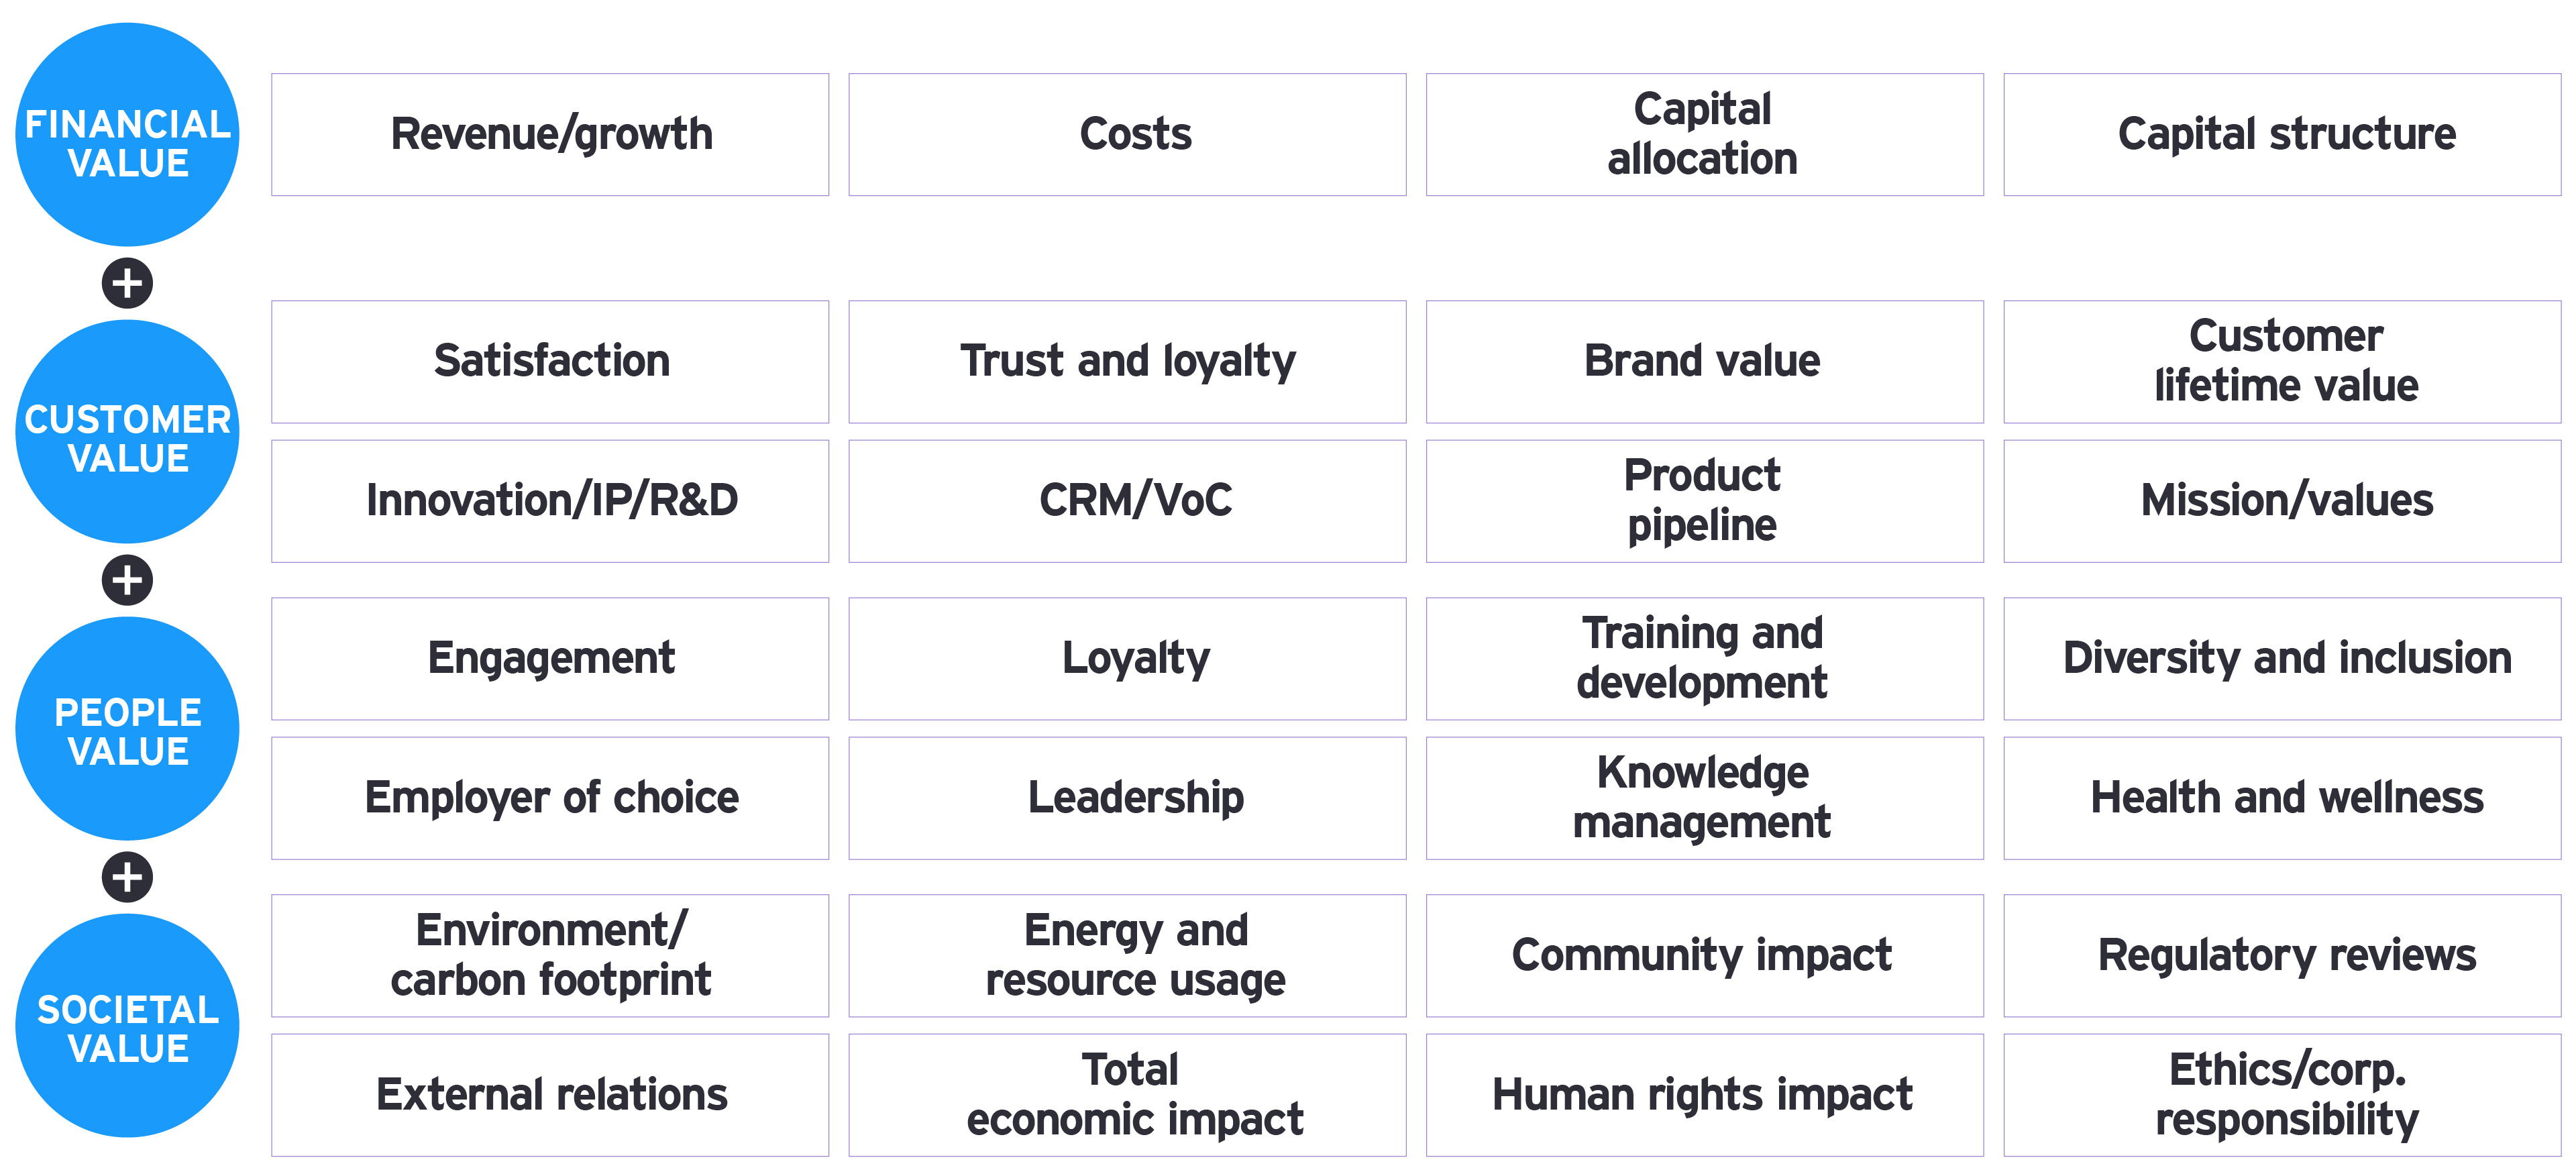 EY Long-Term Value Framework: financial, customer, people and societal value